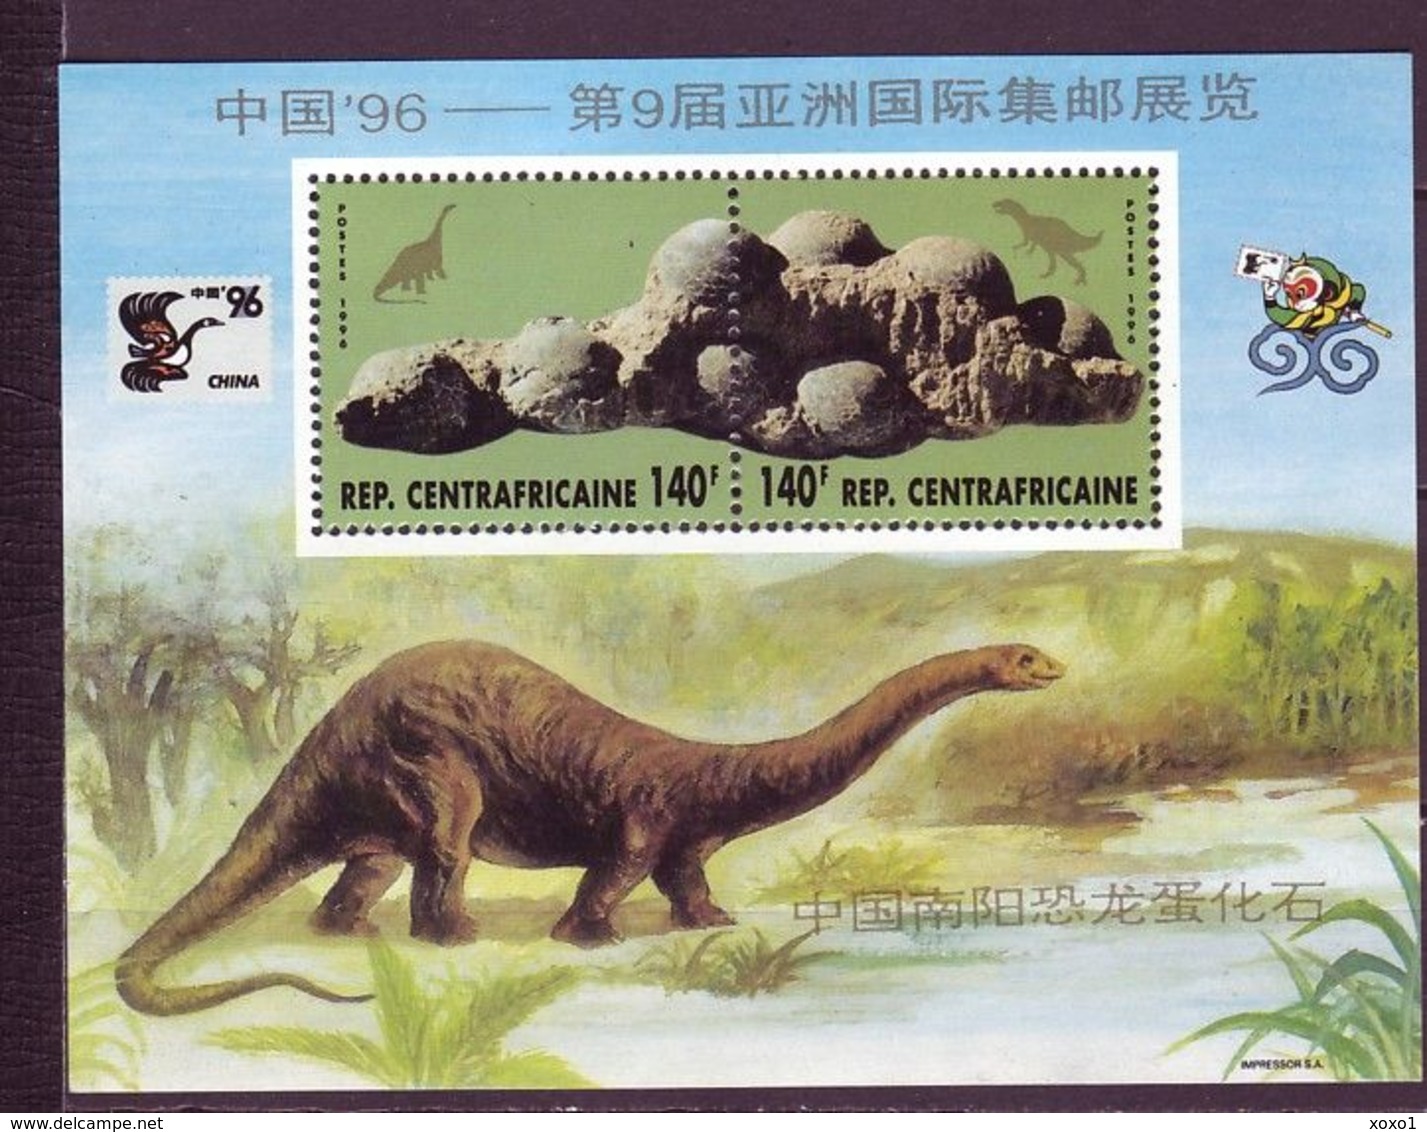 Central African Republic 1996 MiNr. Block 578 Prehistorics Dino CHINA ’96  S\sh MNH ** 3,00 € - Zentralafrik. Republik